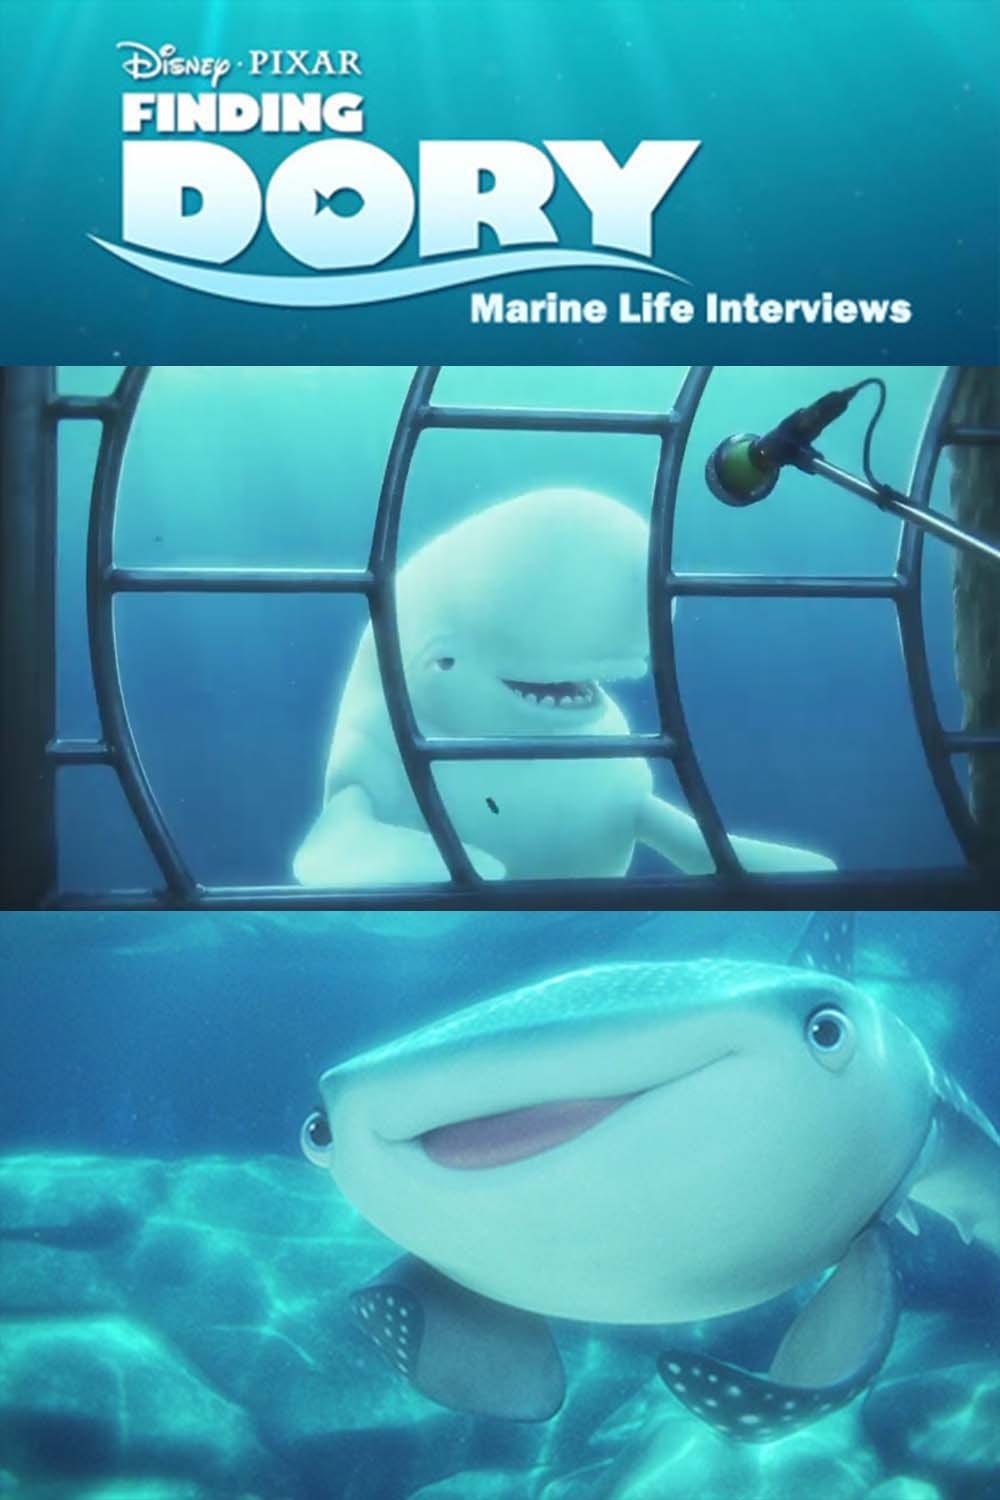 Marine Life Interviews (2017)